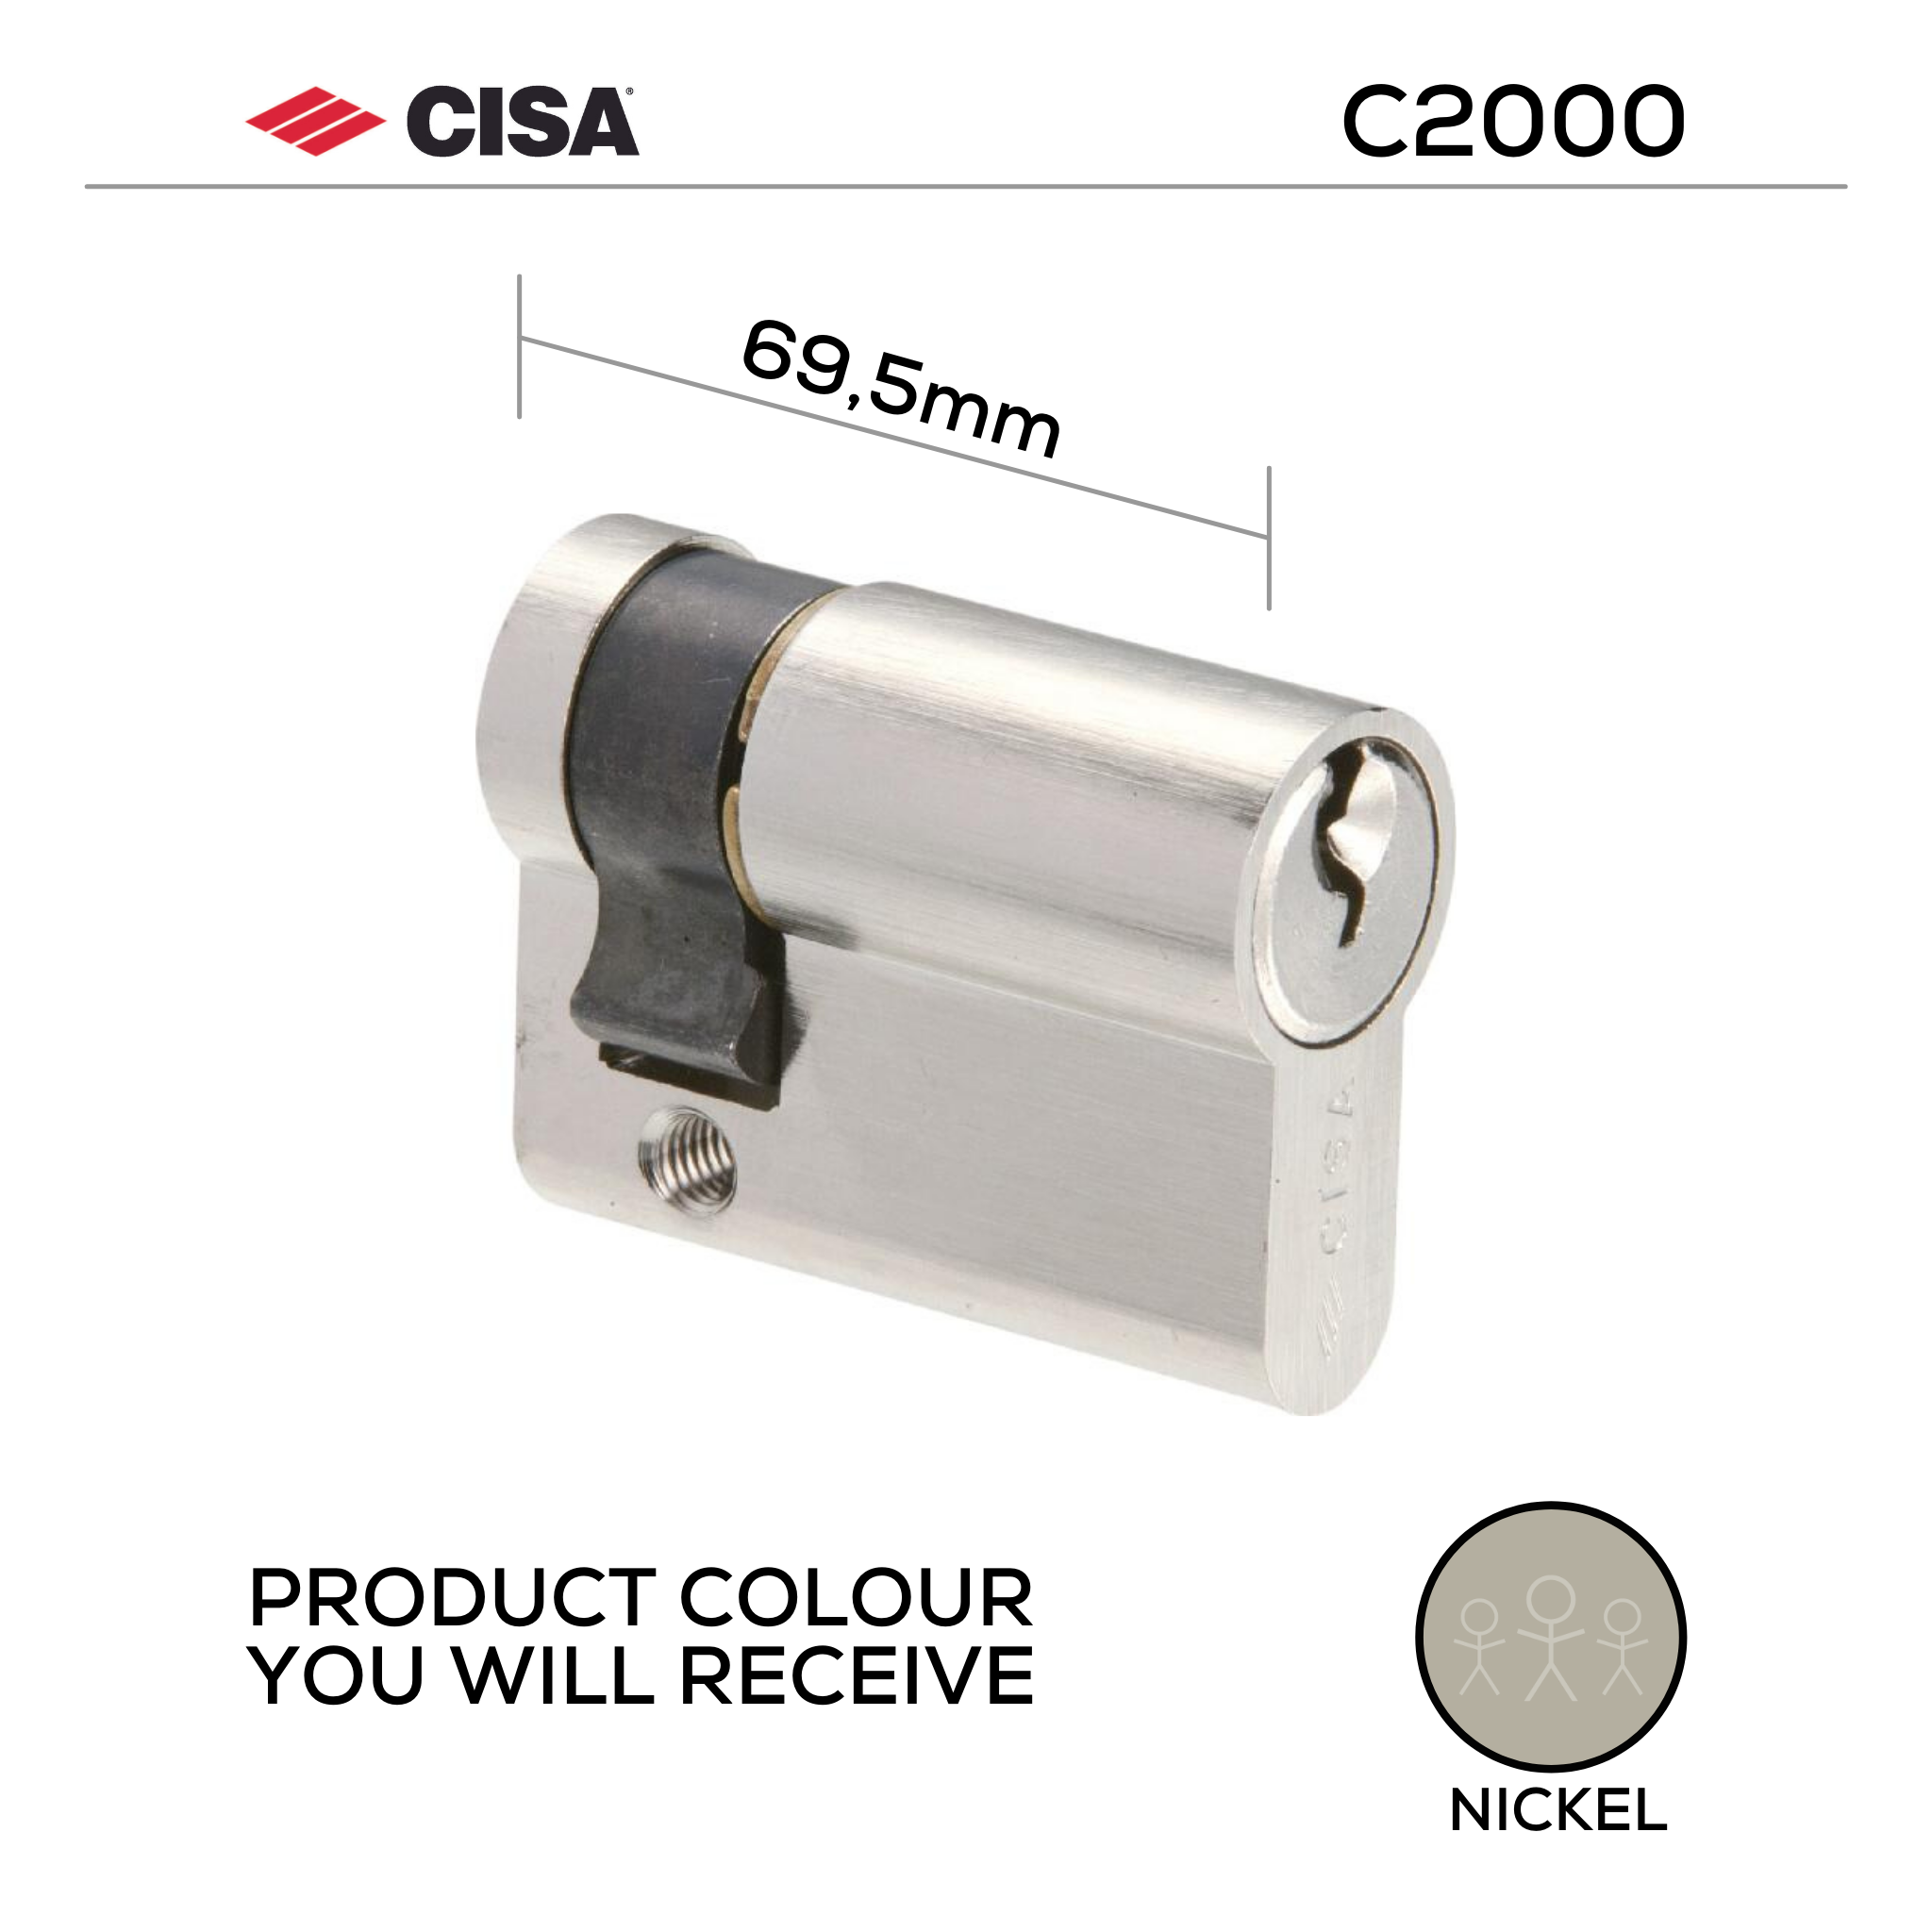 0G304-05-12-KD, 69.5mm - 59.5/10, Half (Single Cylinder), C2000, Key, Keyed to Differ (Standard), 3 Keys, 5 Pin, Nickel, CISA